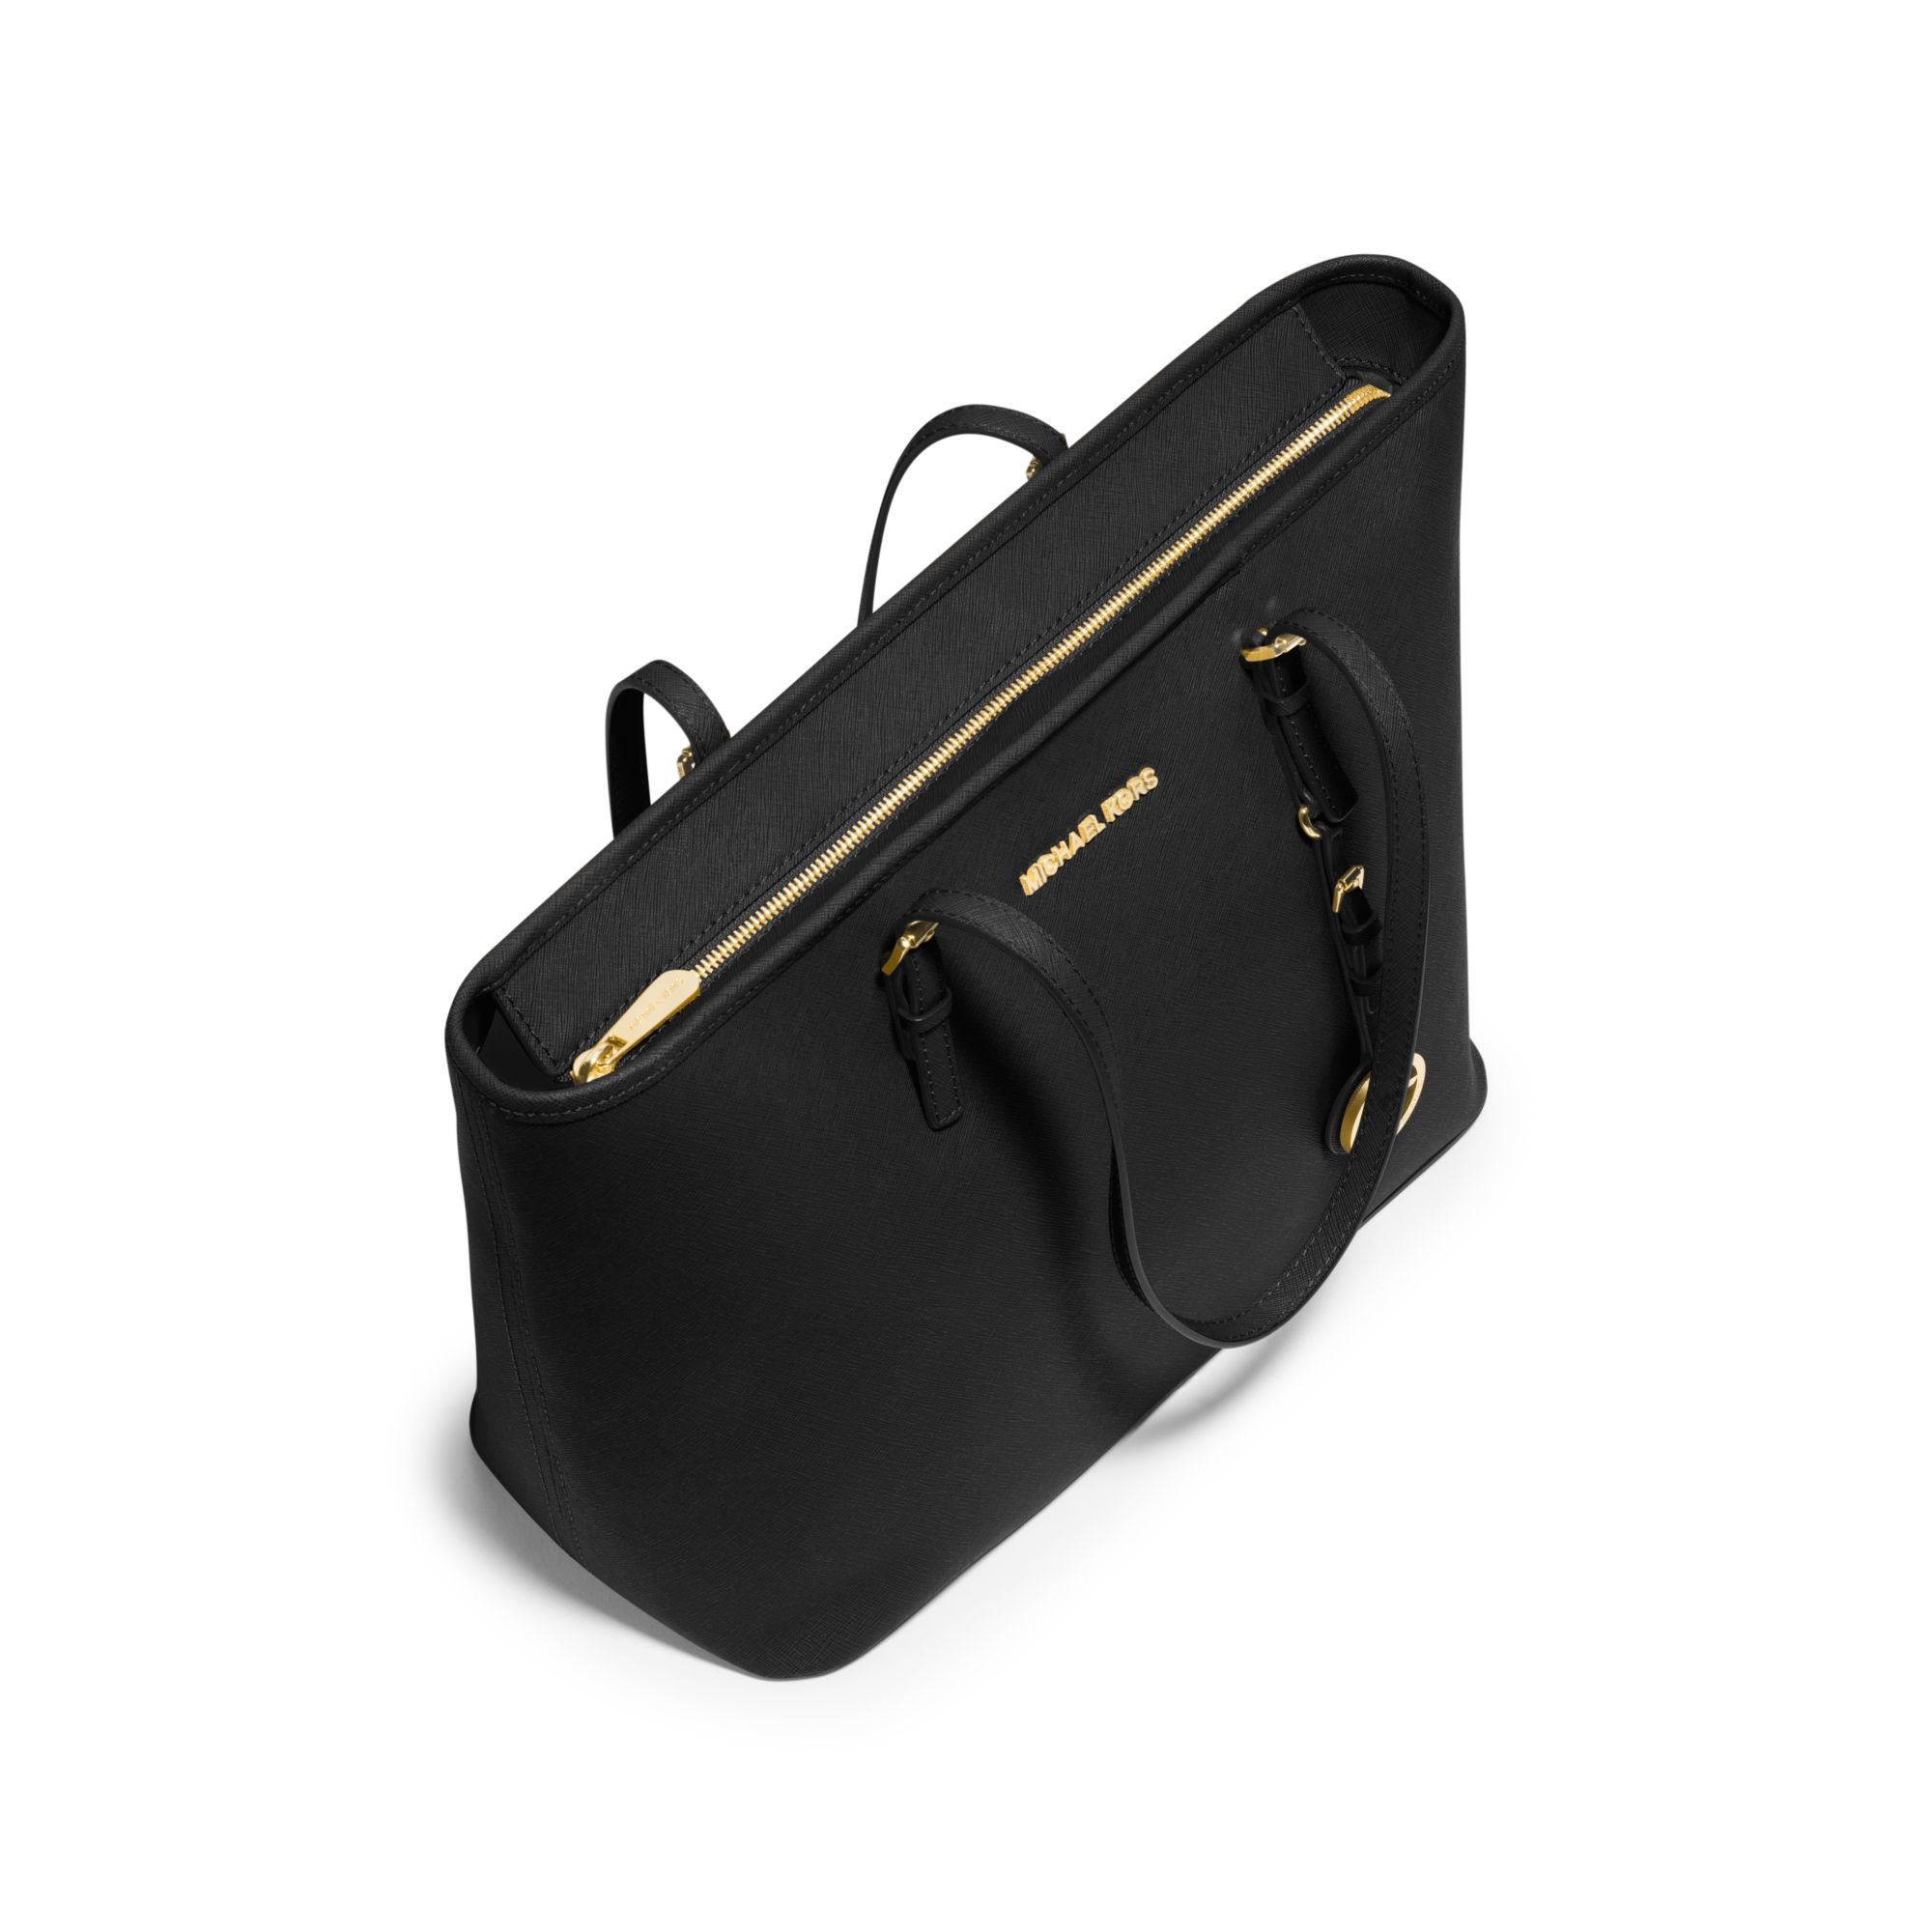 Michael Kors Jet Set Large Saffiano Leather Tote Bag in Black - Lyst